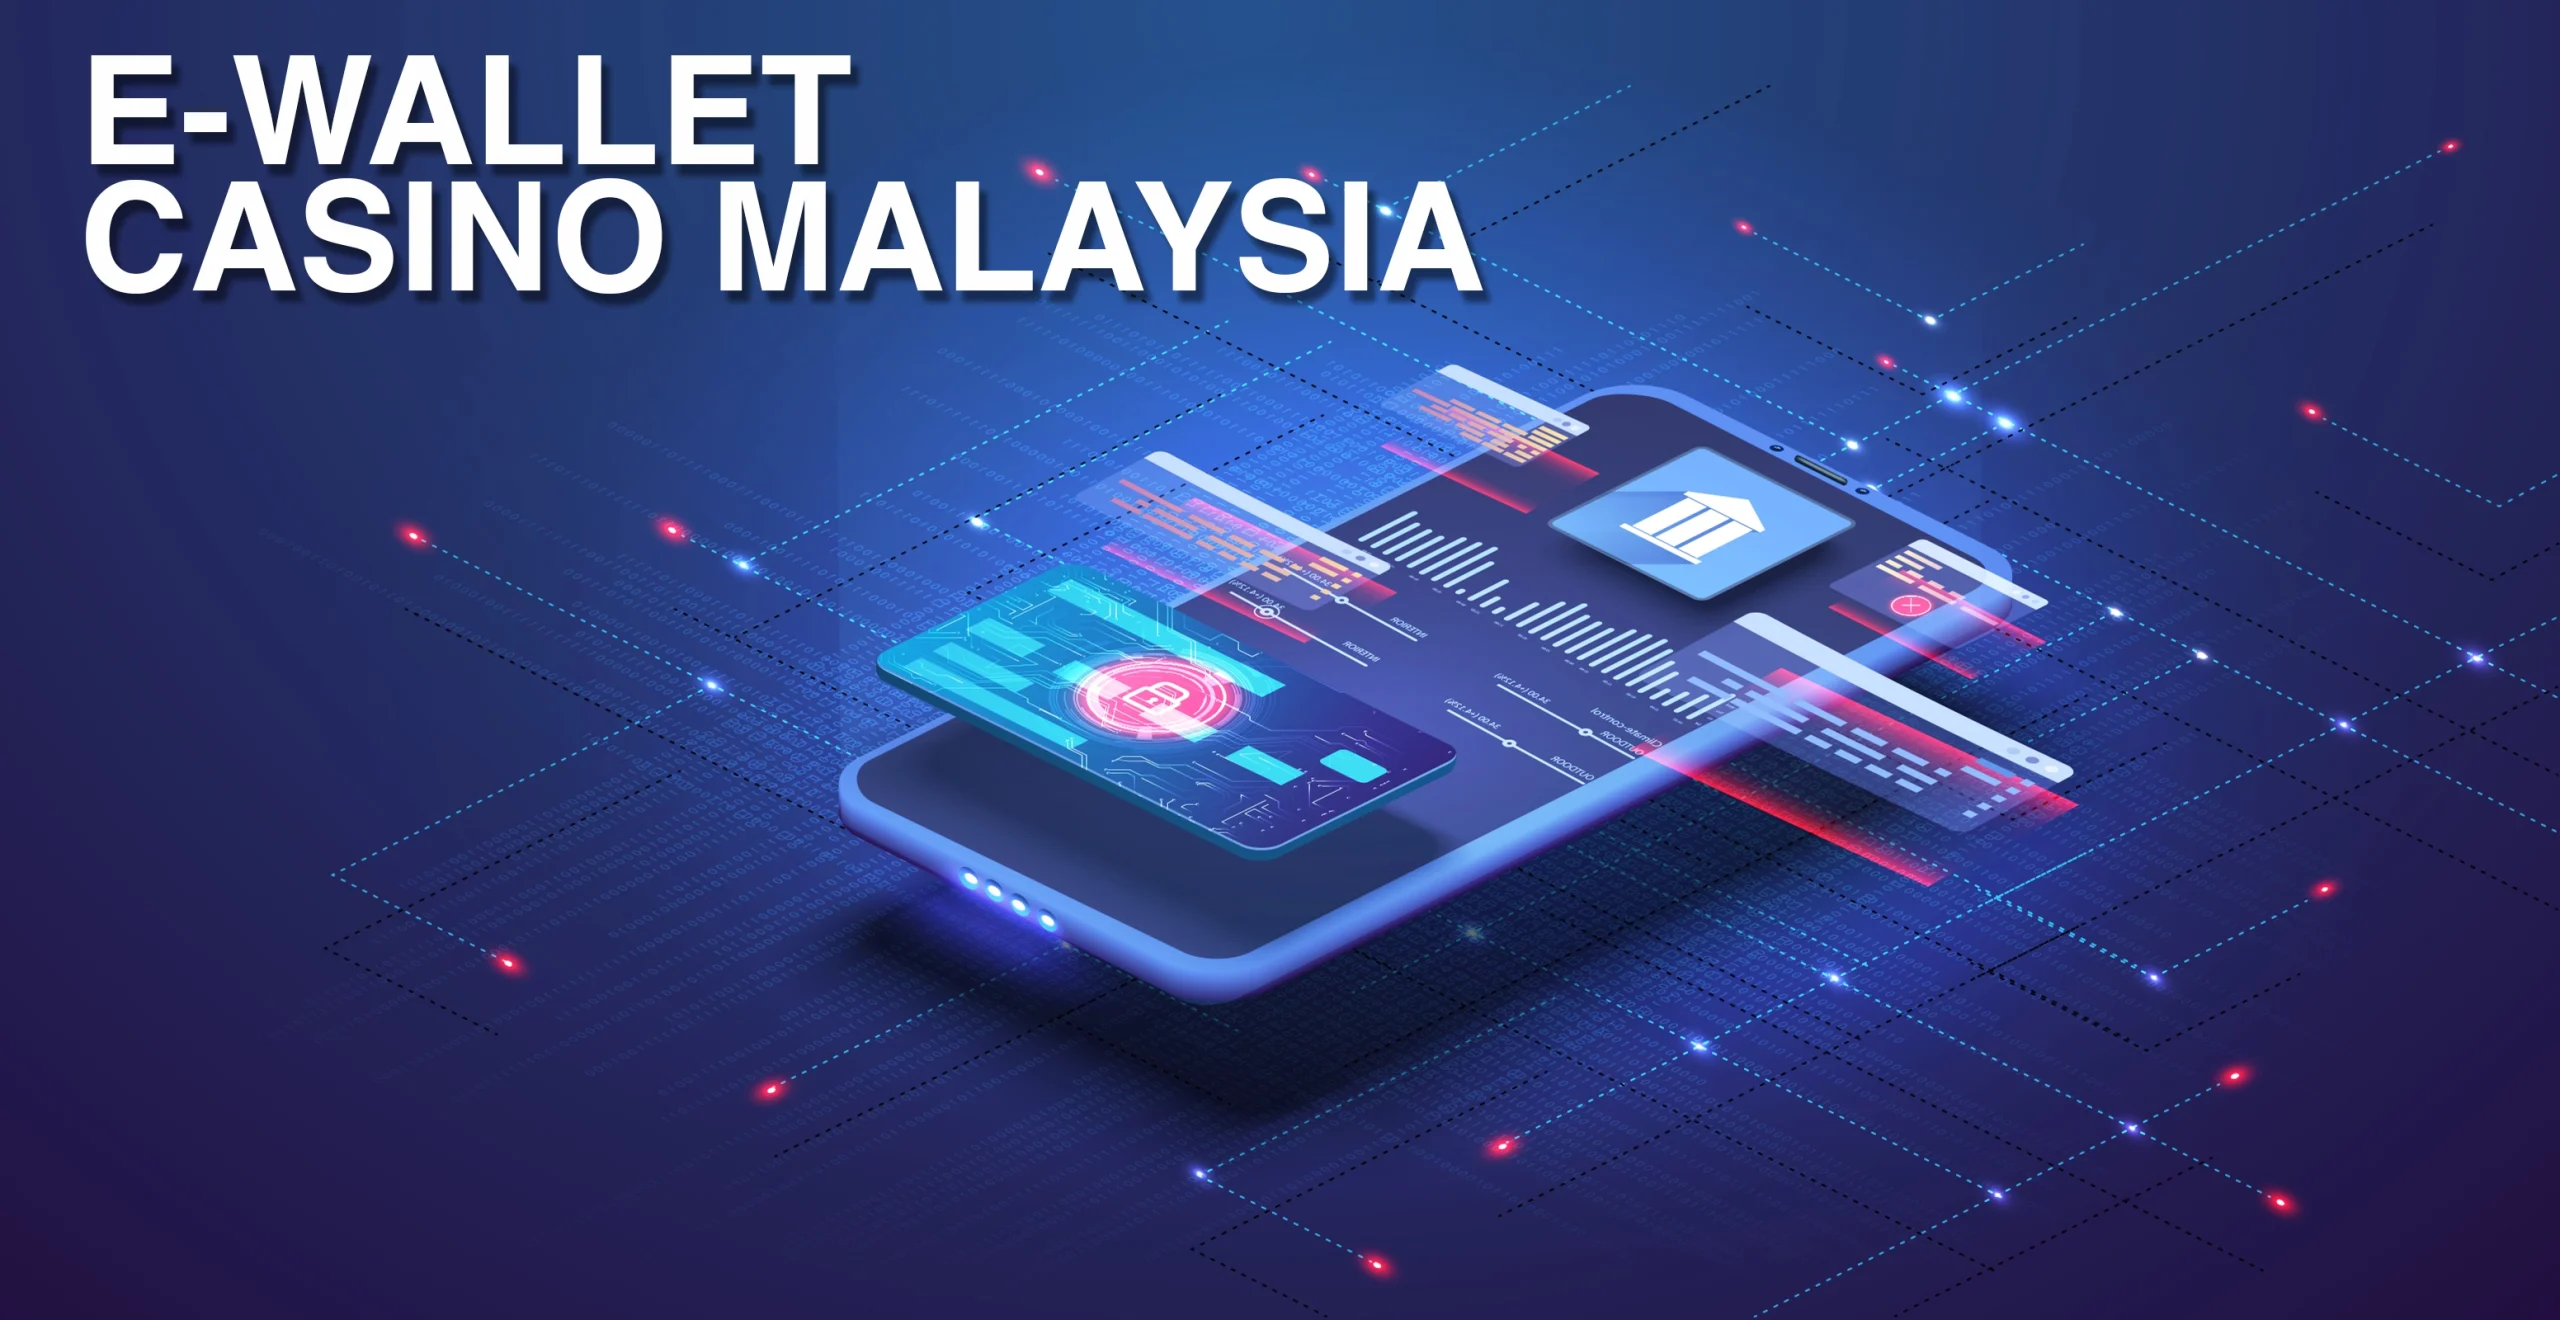 E-Wallet Casino Malaysia